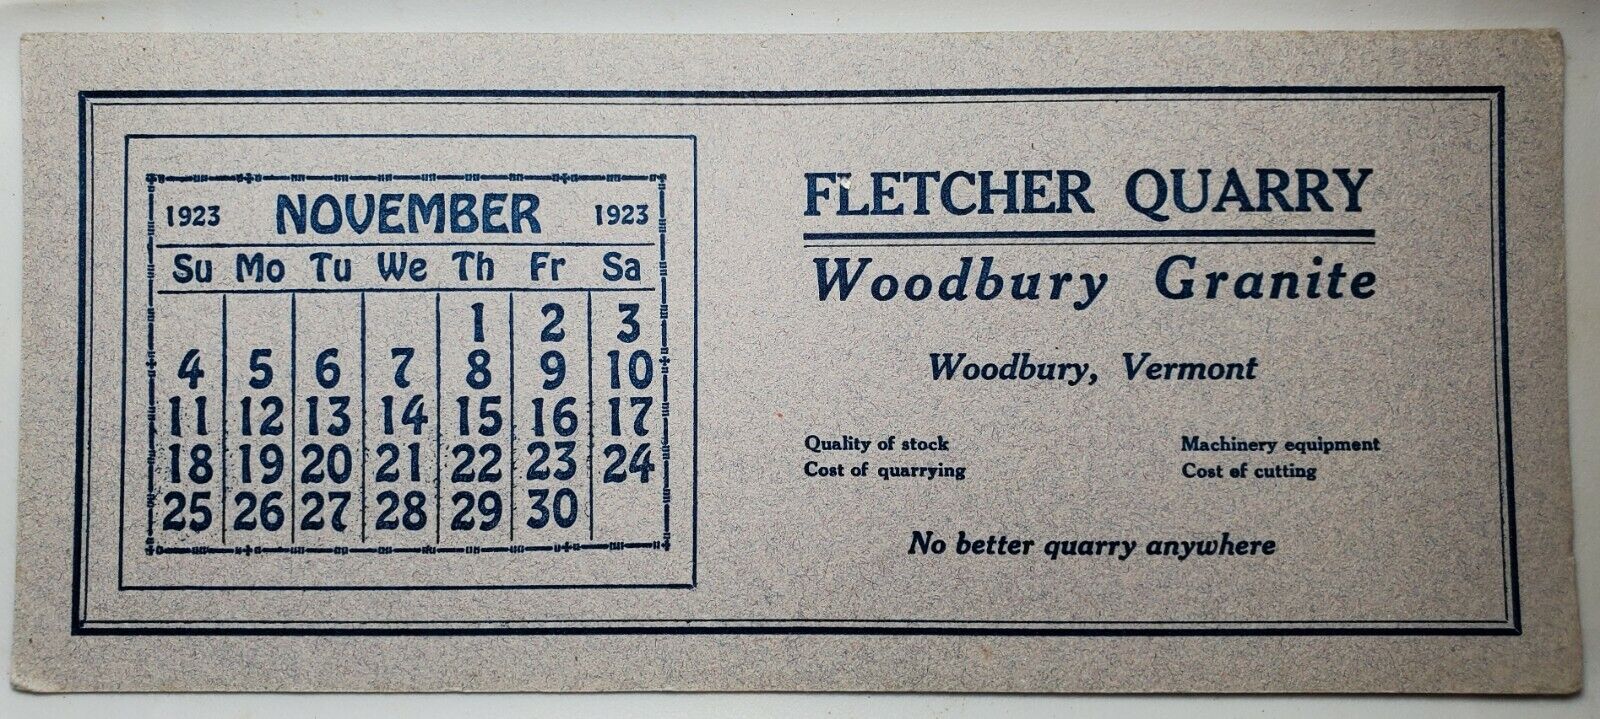 1923 FLETCHER QUARRY WOODBURY GRANITE WOODBURY, VT INK BLOTTER